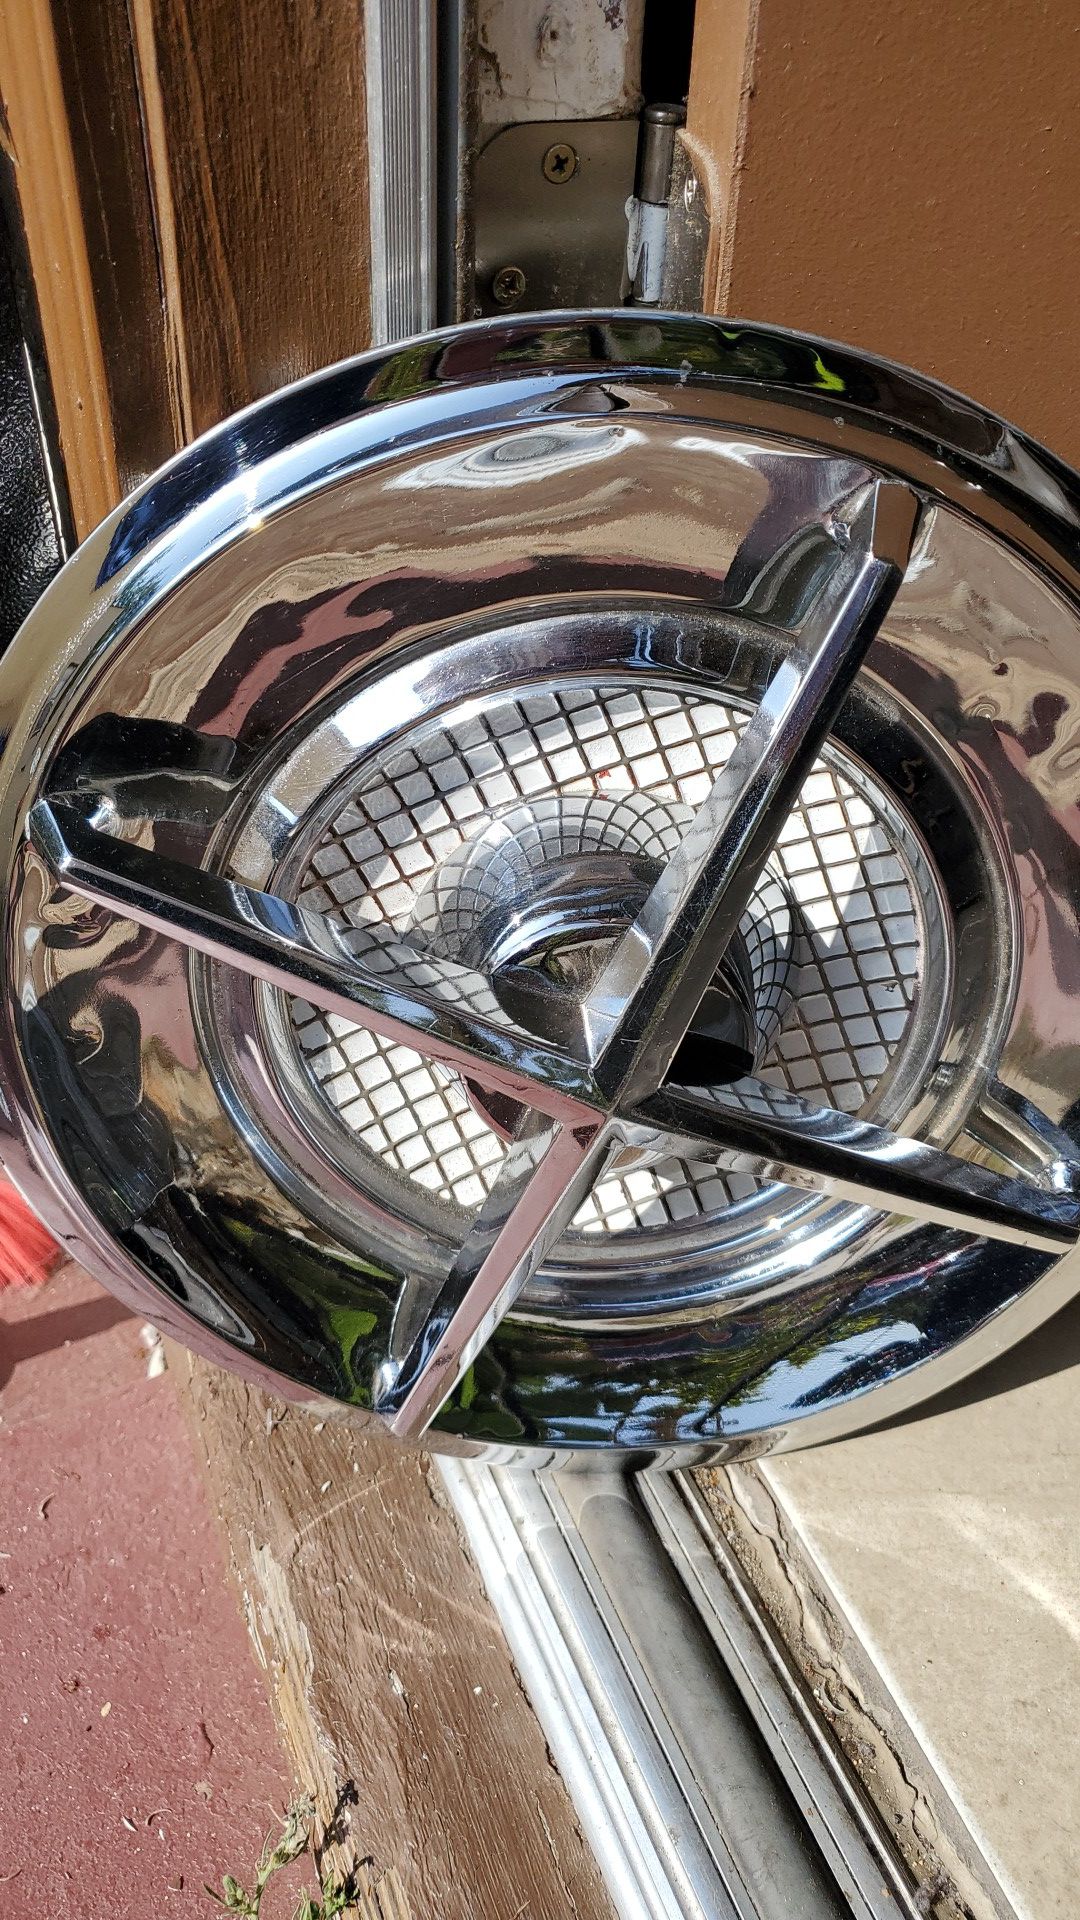 Chevy parts hub caps